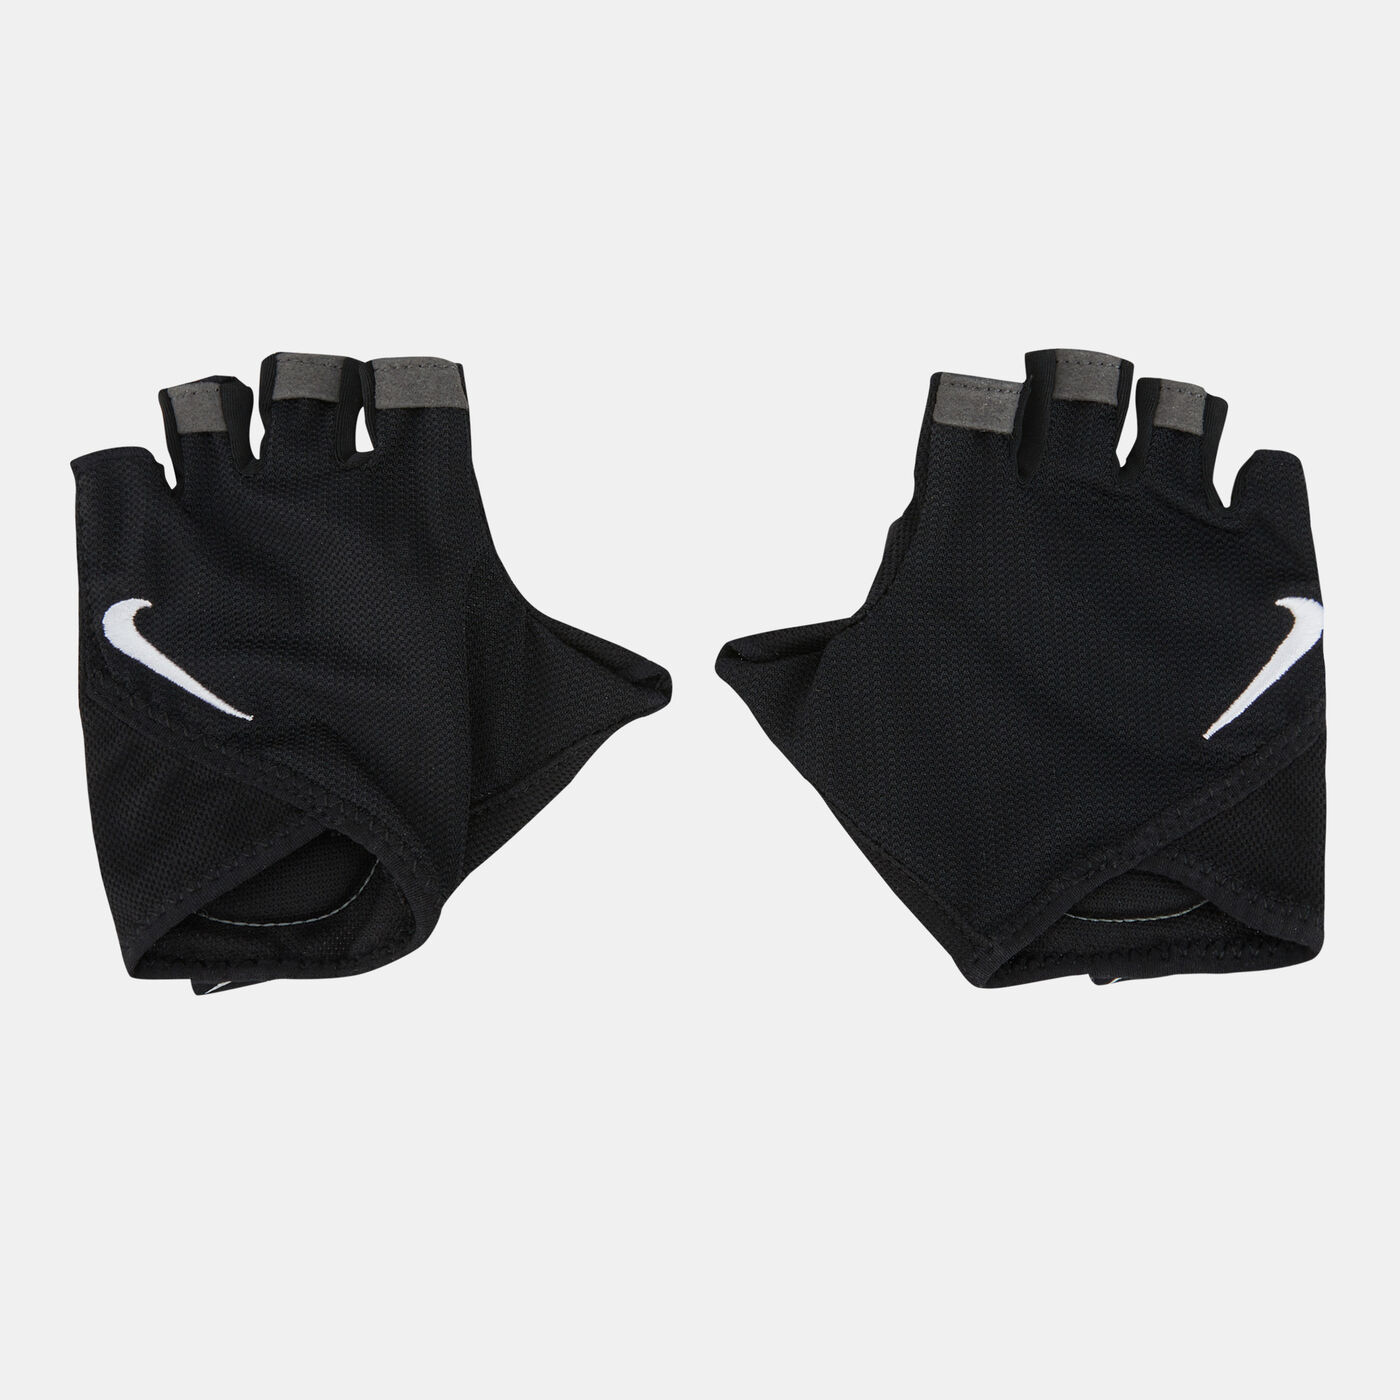 Women's Gym Essential Fitness Gloves